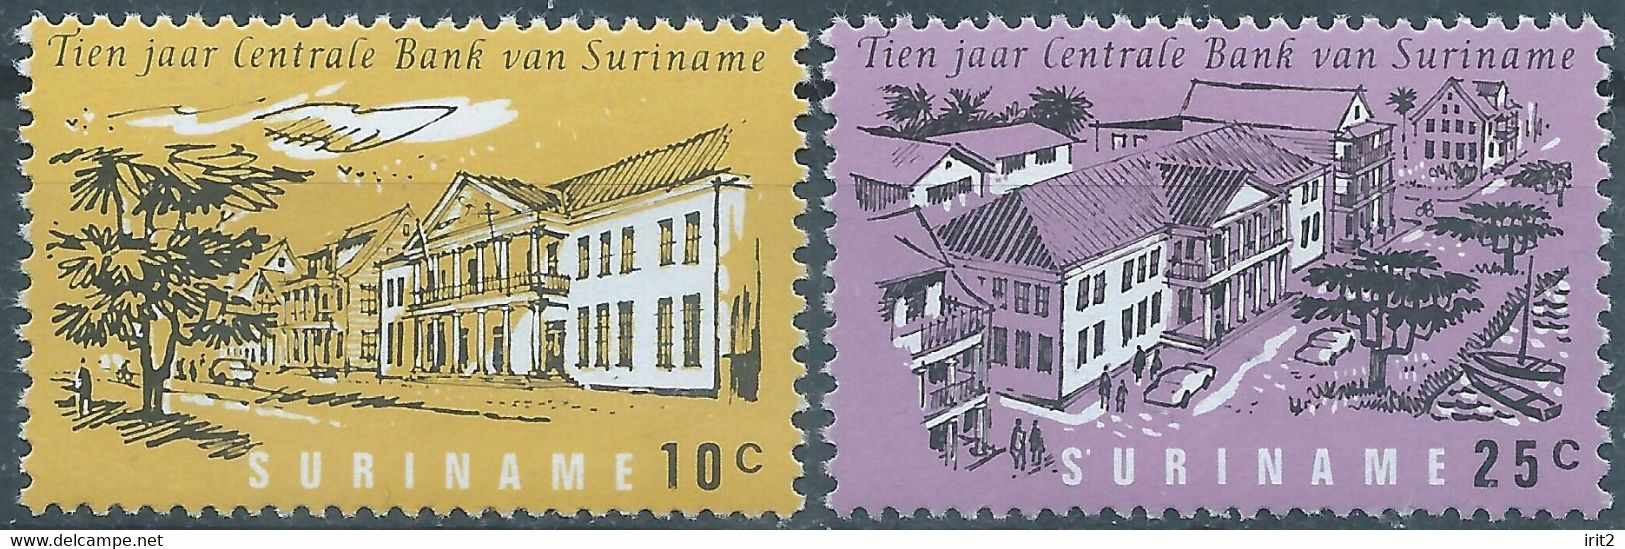 Suriname,1967 The 10th Anniversary Of Surinam Central Bank,MNH - Surinam